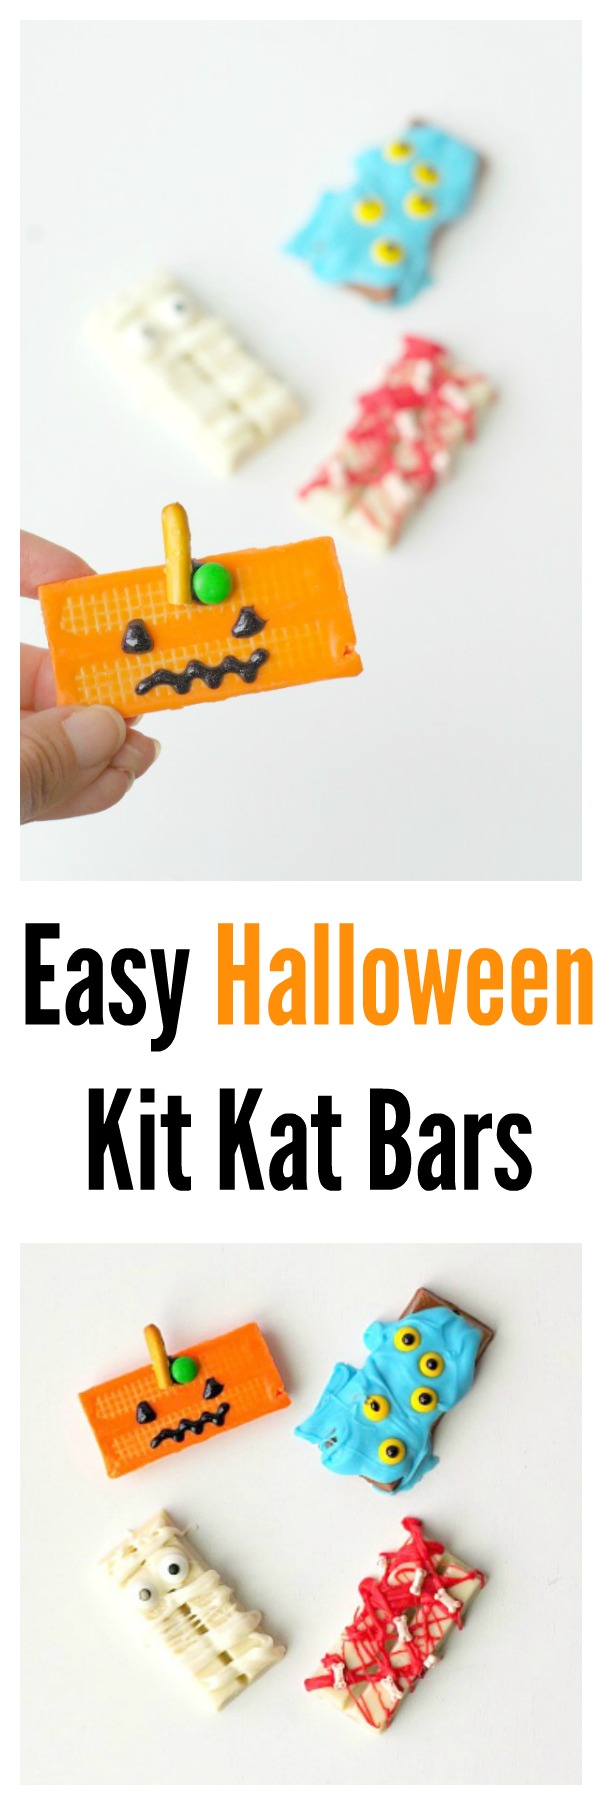 easy-halloween-kit-kat-bars-pumpkins-mummies-monsters-and-bloody-kit-kat-bars